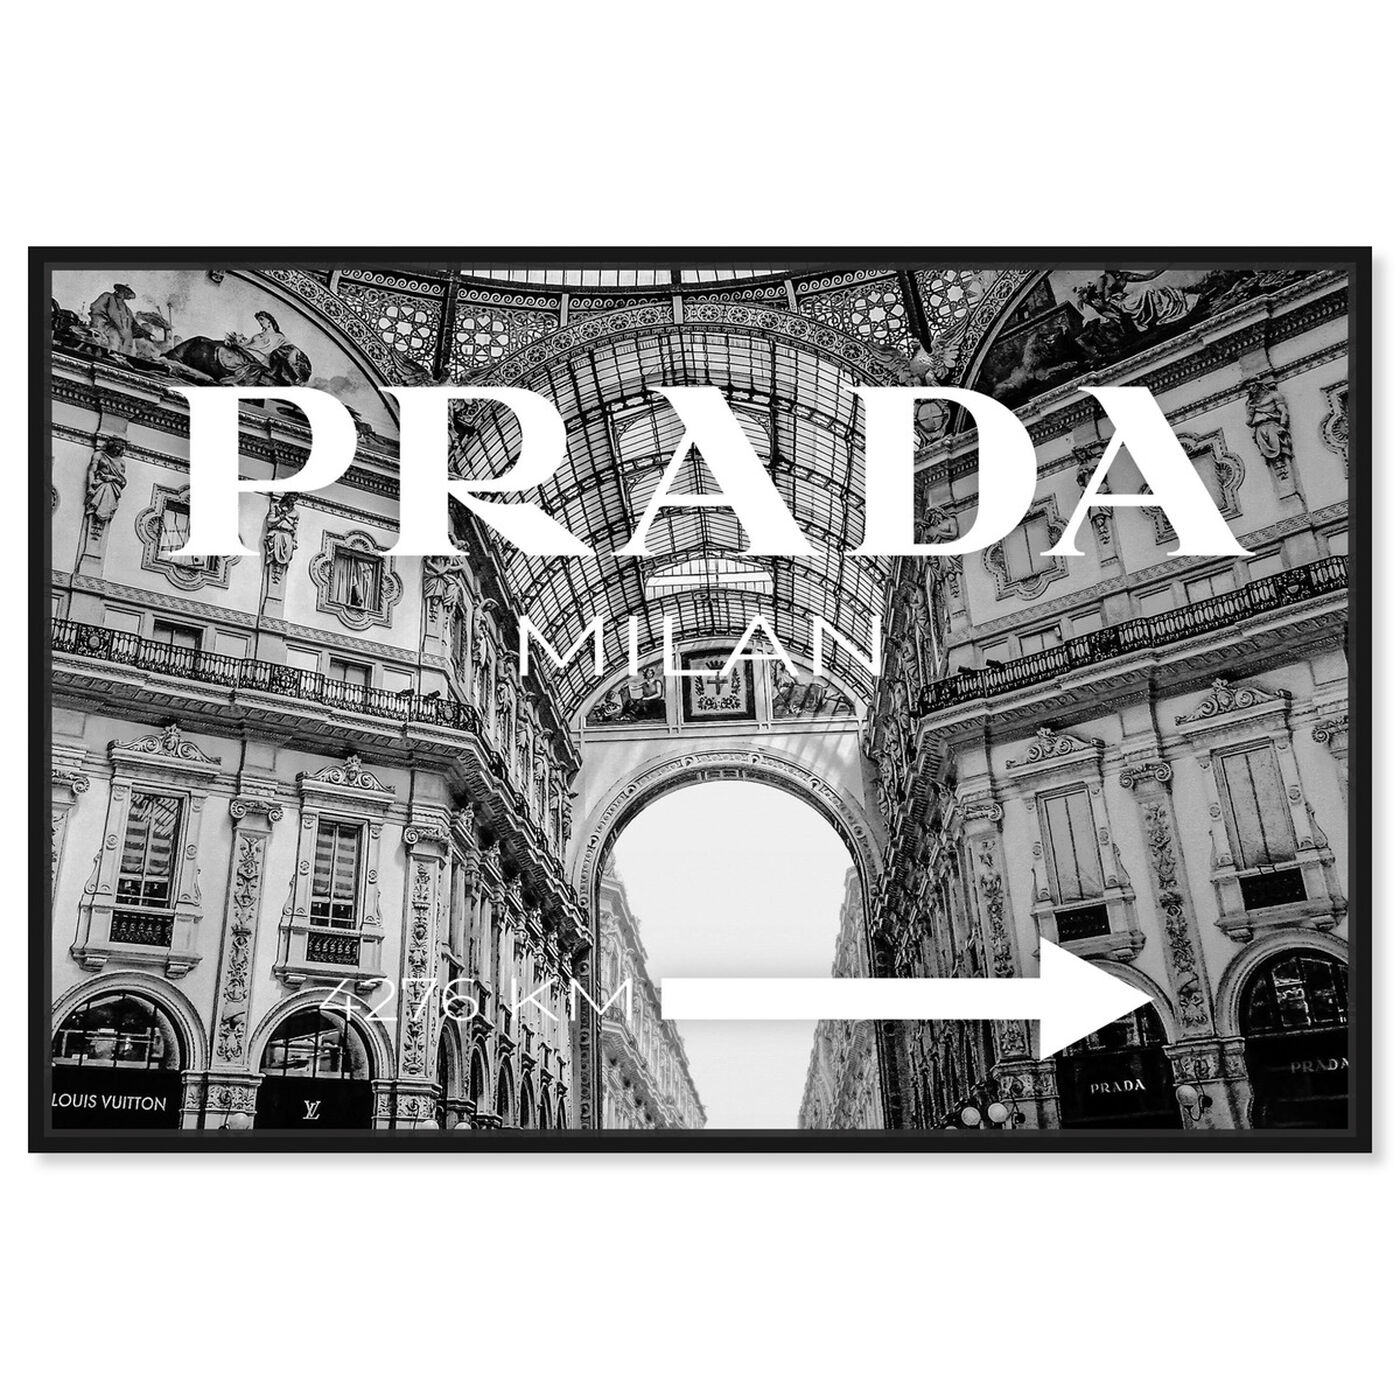 Prada Print, Fashion Poster, Prada Wall Art, Fashion Street Sign